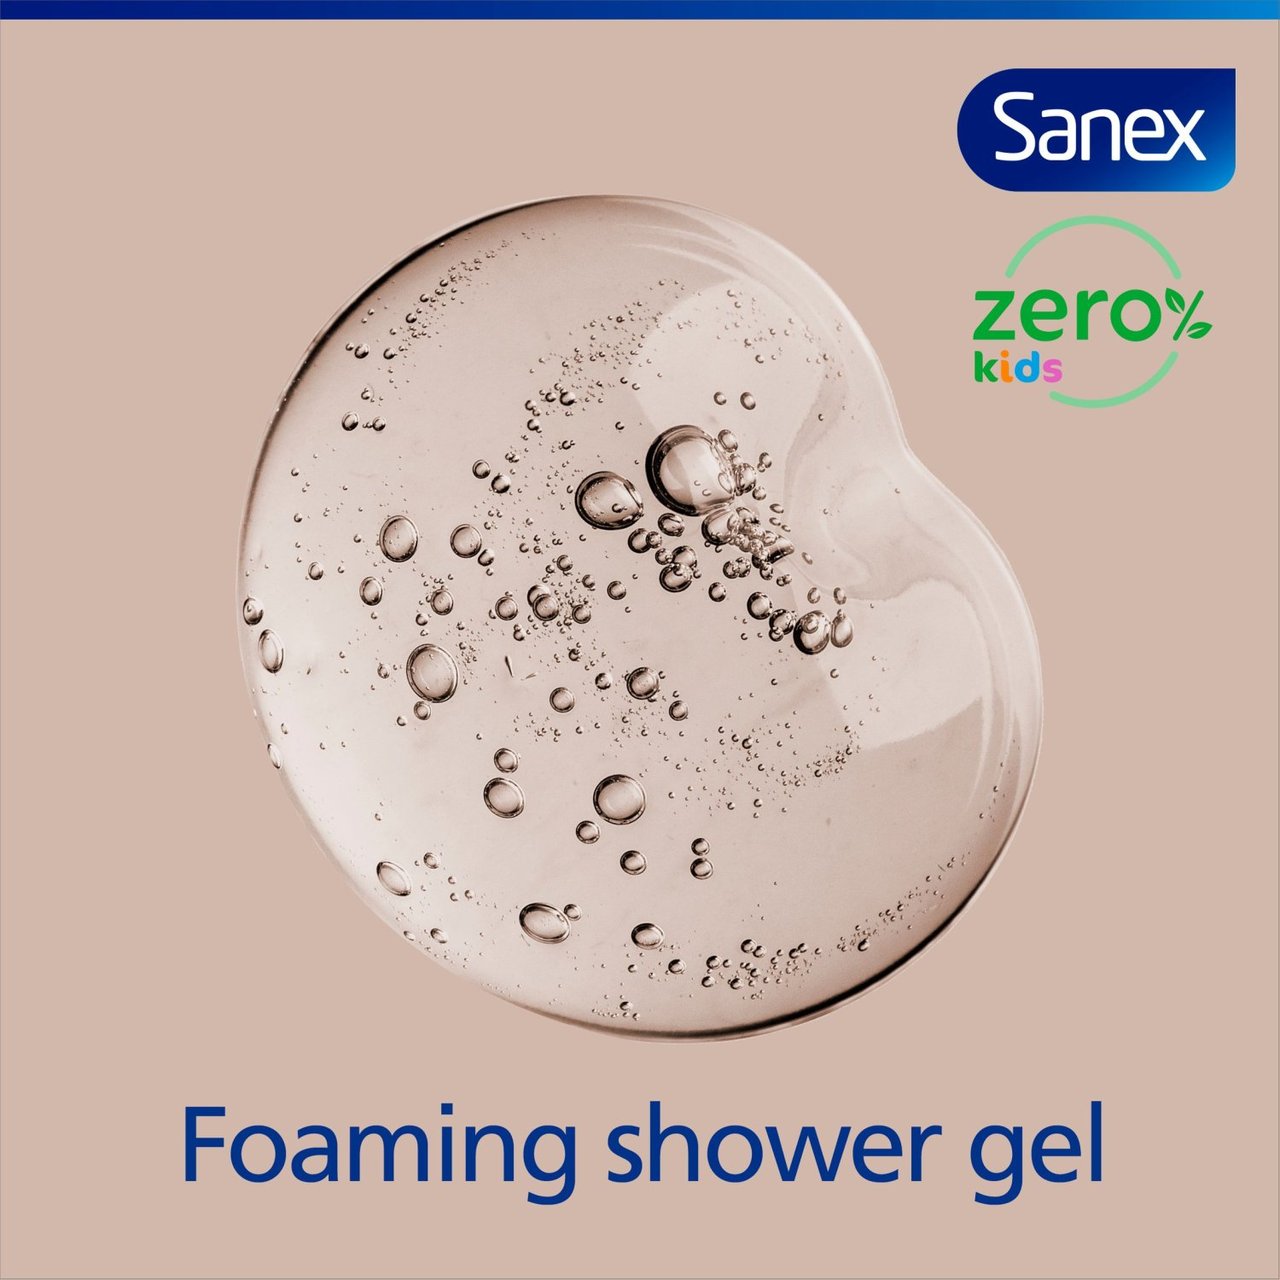 Sanex Zero % Kids Body Wash 450ml